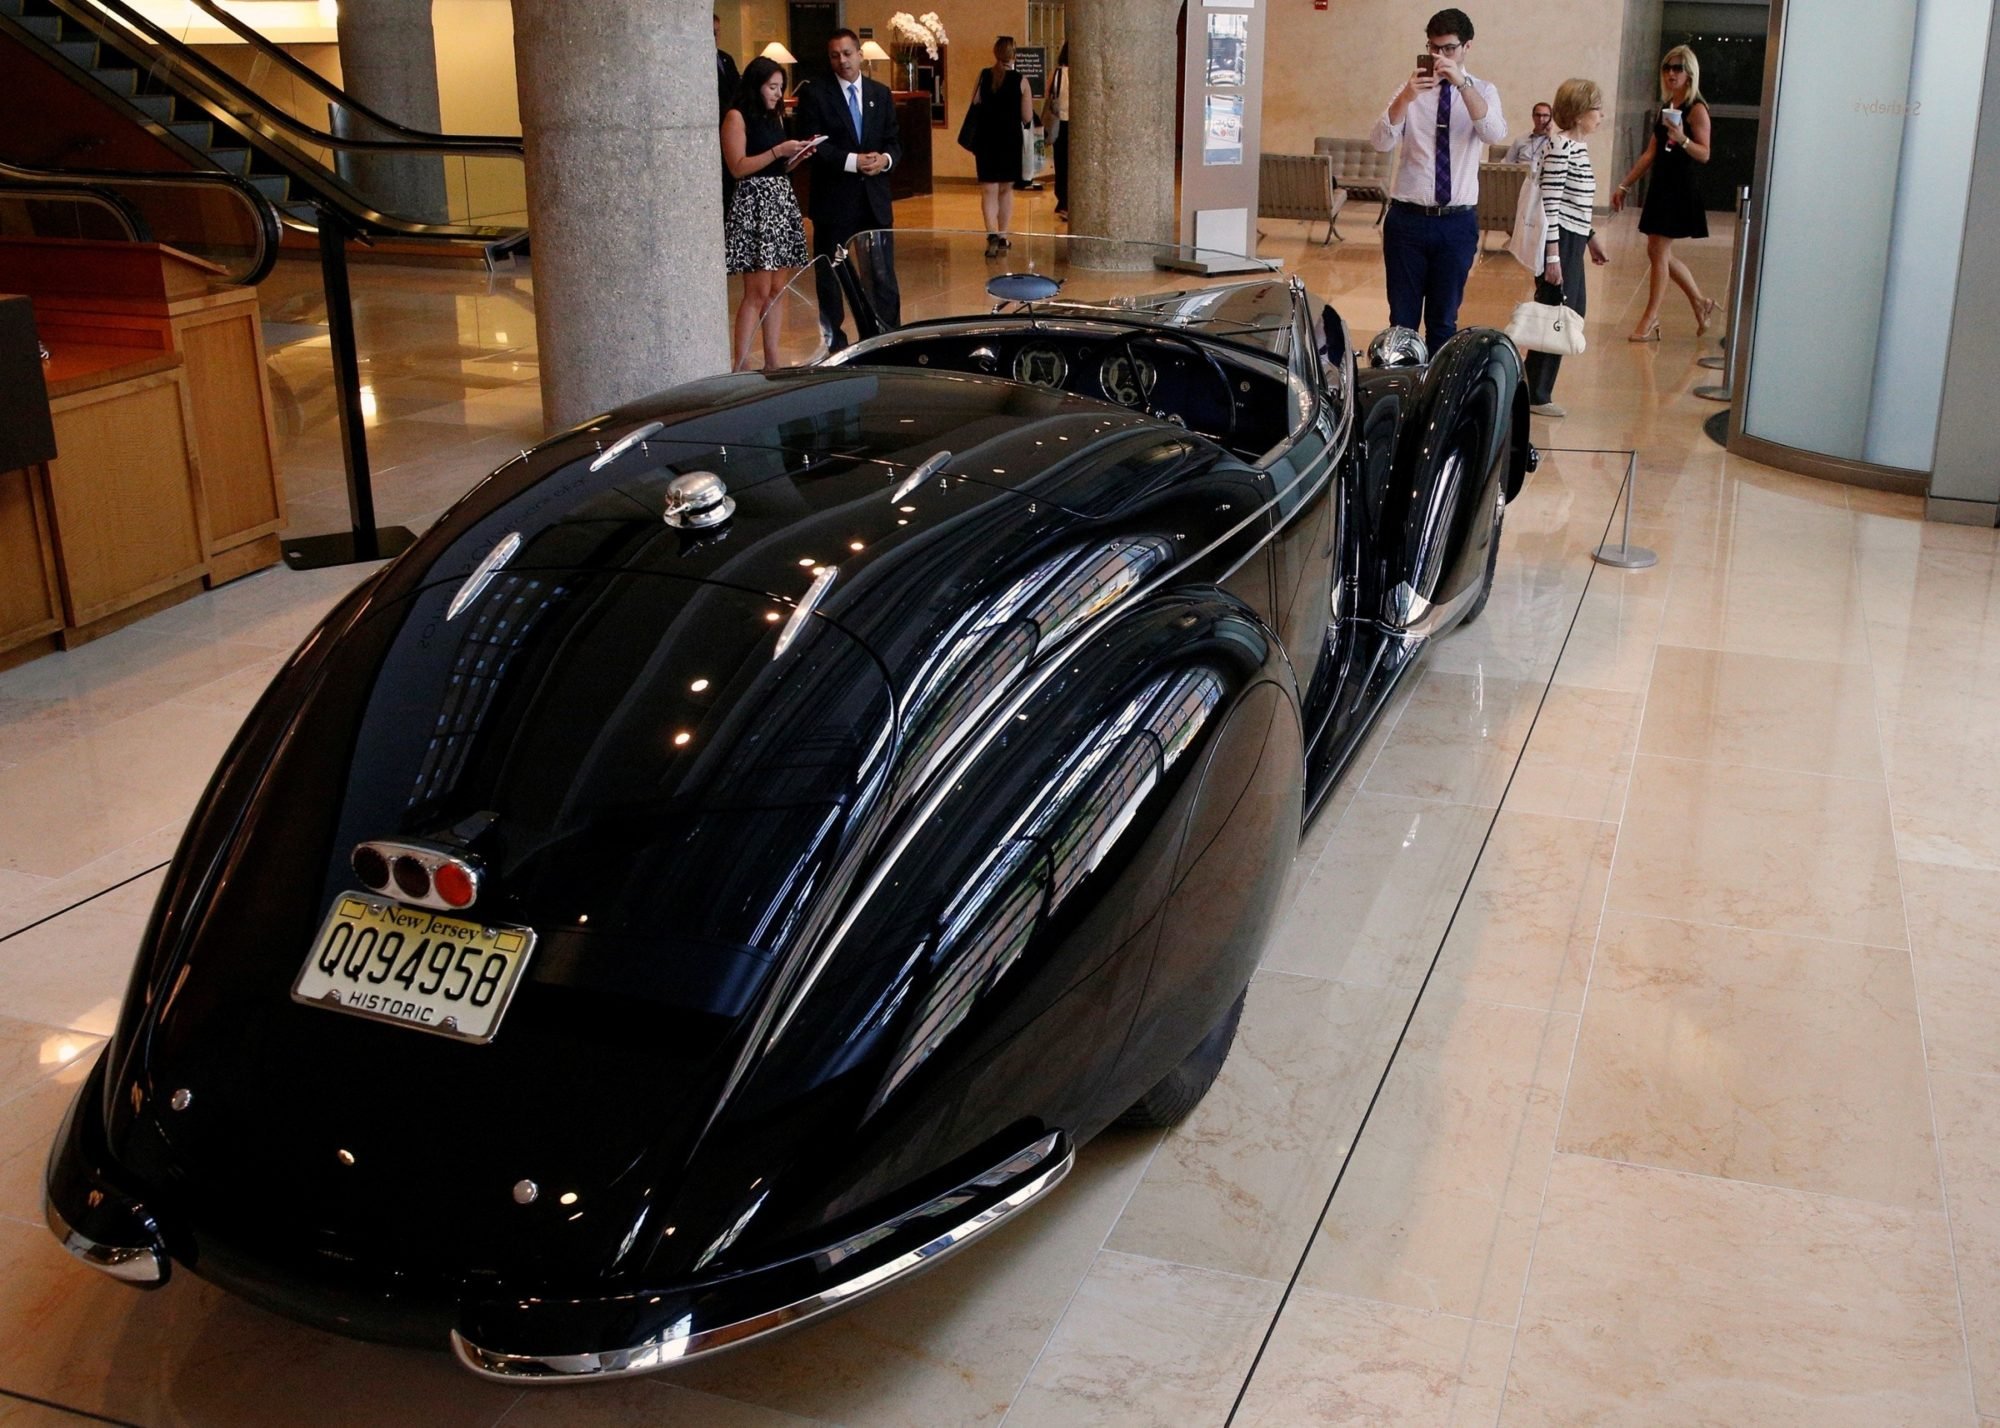 Машина за 1 доллар. Альфа Ромео 15 миллионов. Alfa Romeo 8c 2900b lungo Spider. Самаяядорогая машина в мире. Самая дорогая машина.